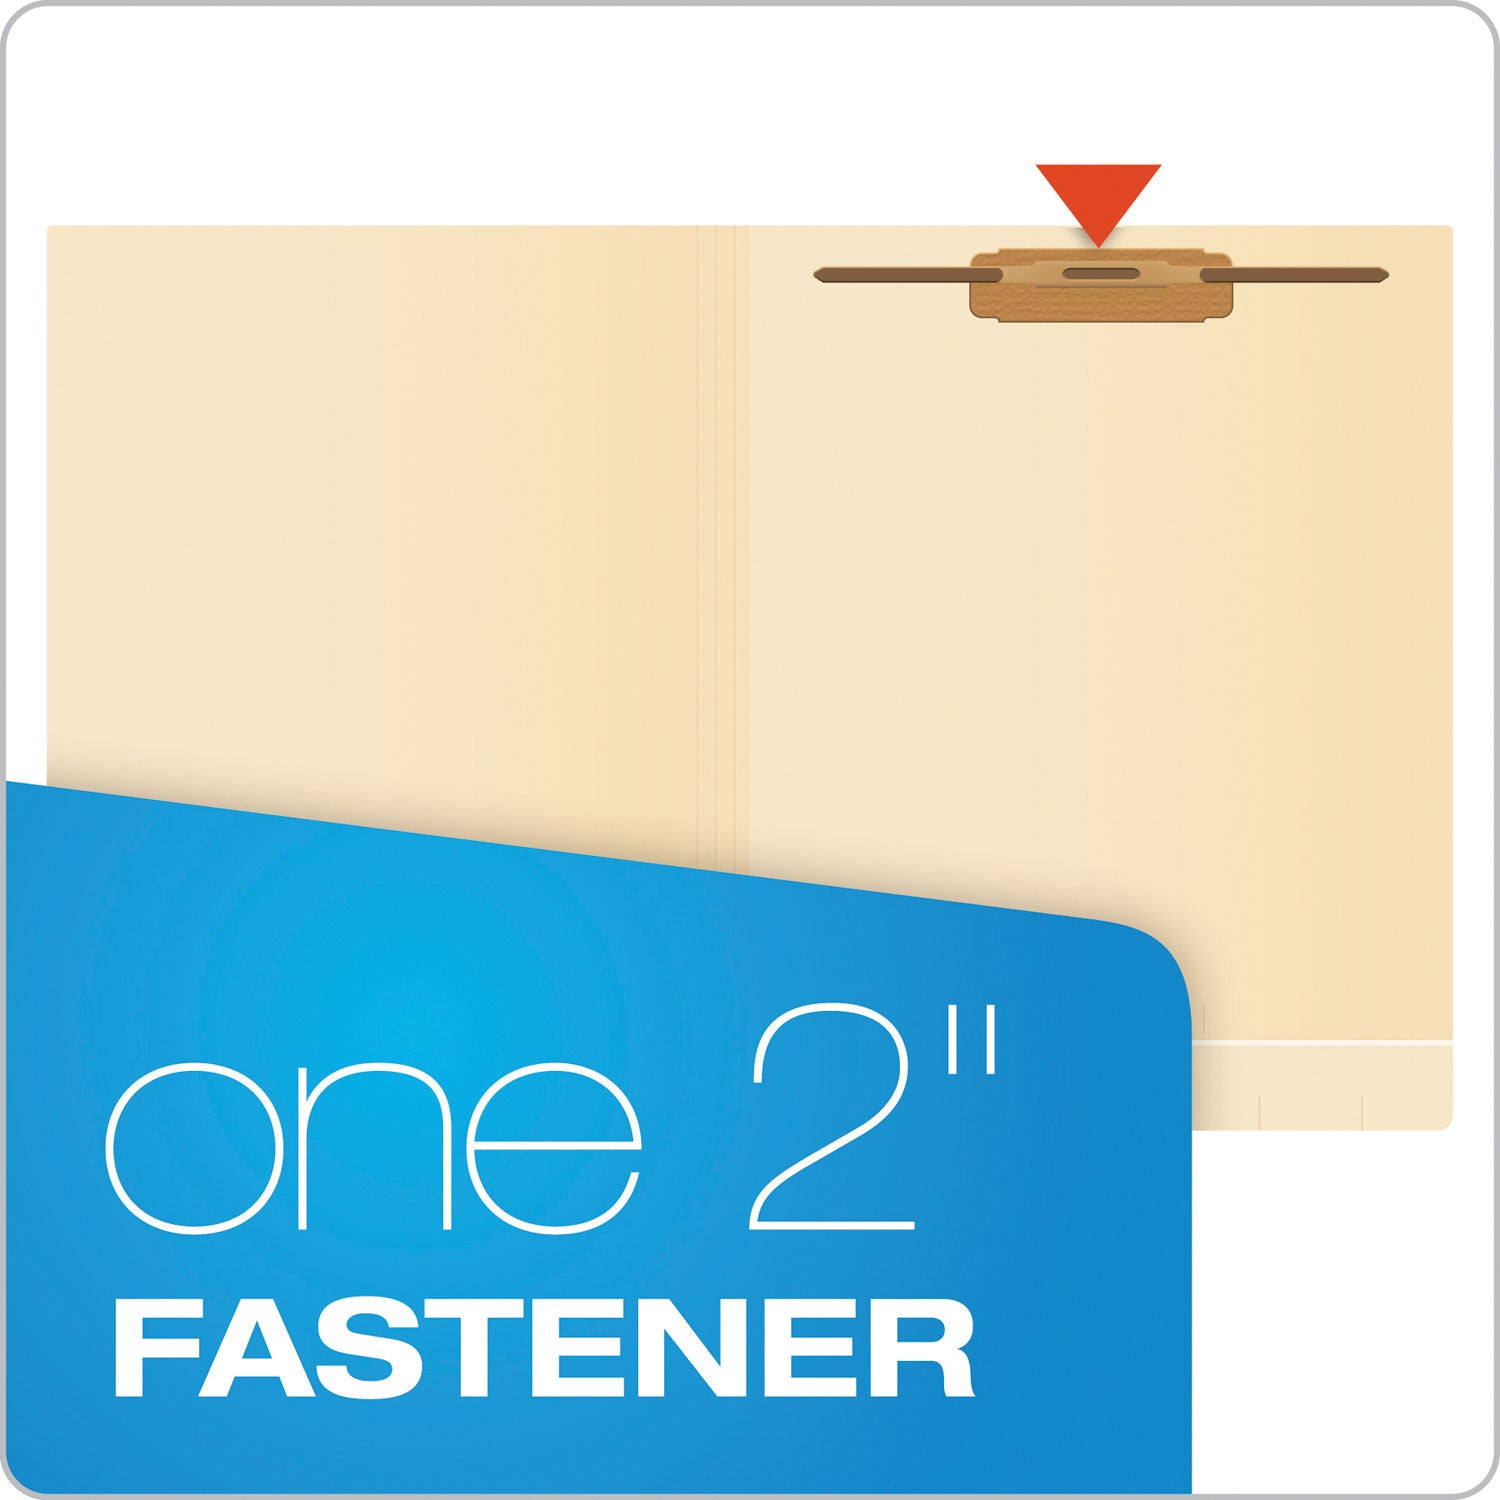 Manila Laminated End Tab Fastener Folders, 11-pt Manila, 0.75" Expansion, 1 Fastener, Letter Size, Manila Exterior, 50/Box - 